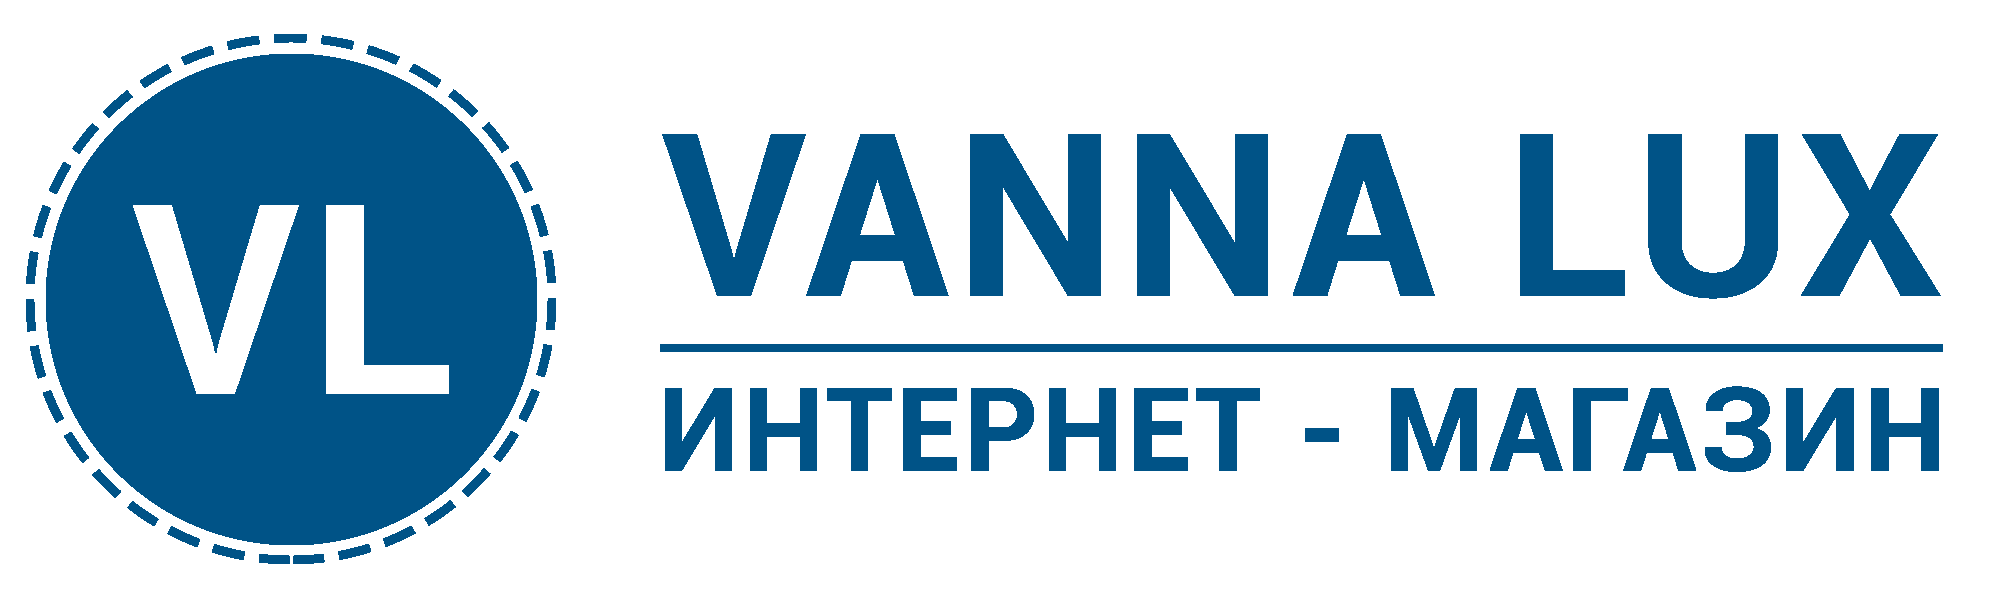 Vanna lux - Интернет-магазин сантехники